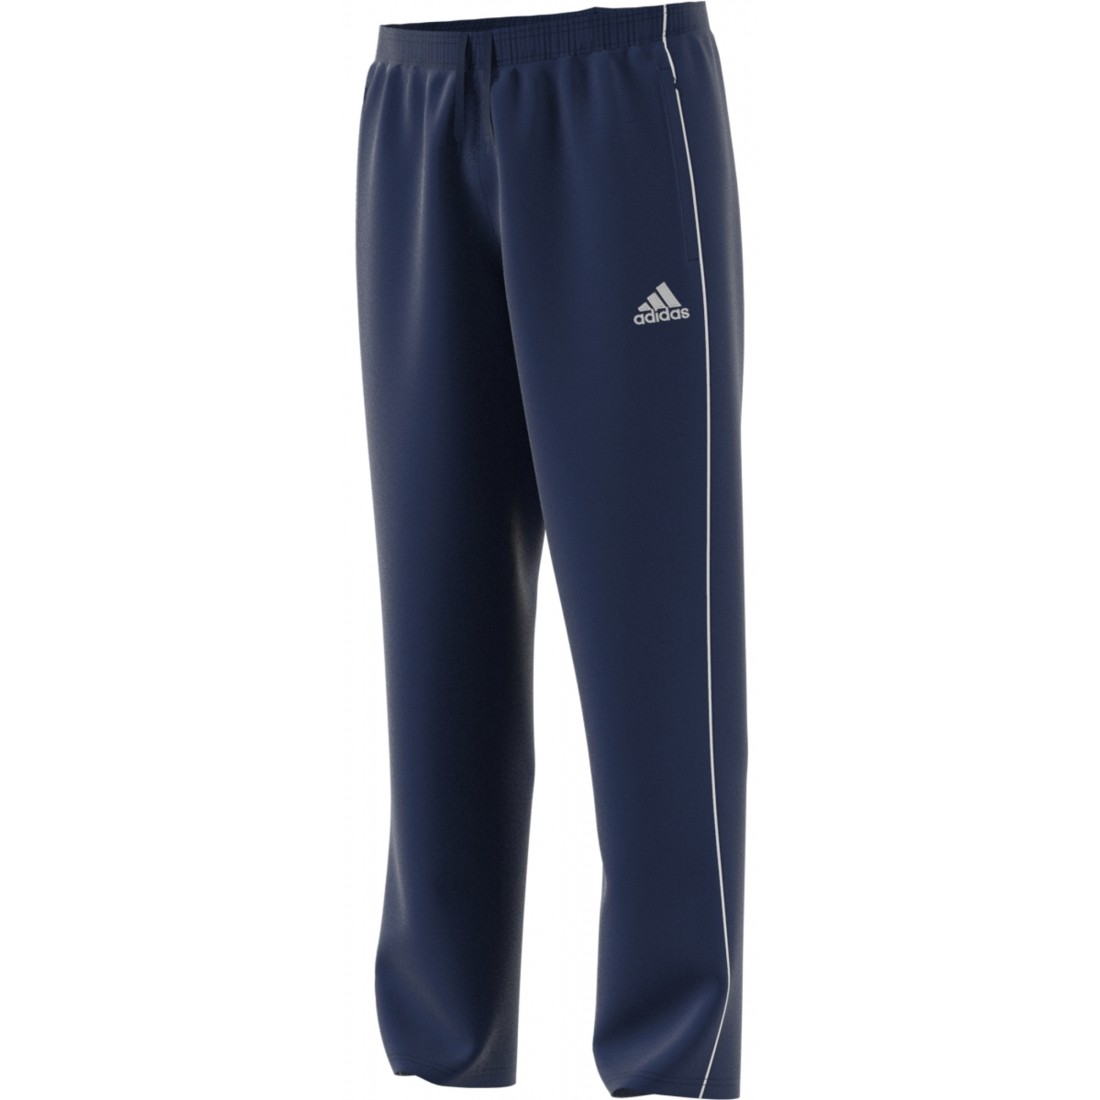 Adidas pantalon chandal PRESENTACIÓN CORE 18 marino hombre | Deportes Tienda deportivo